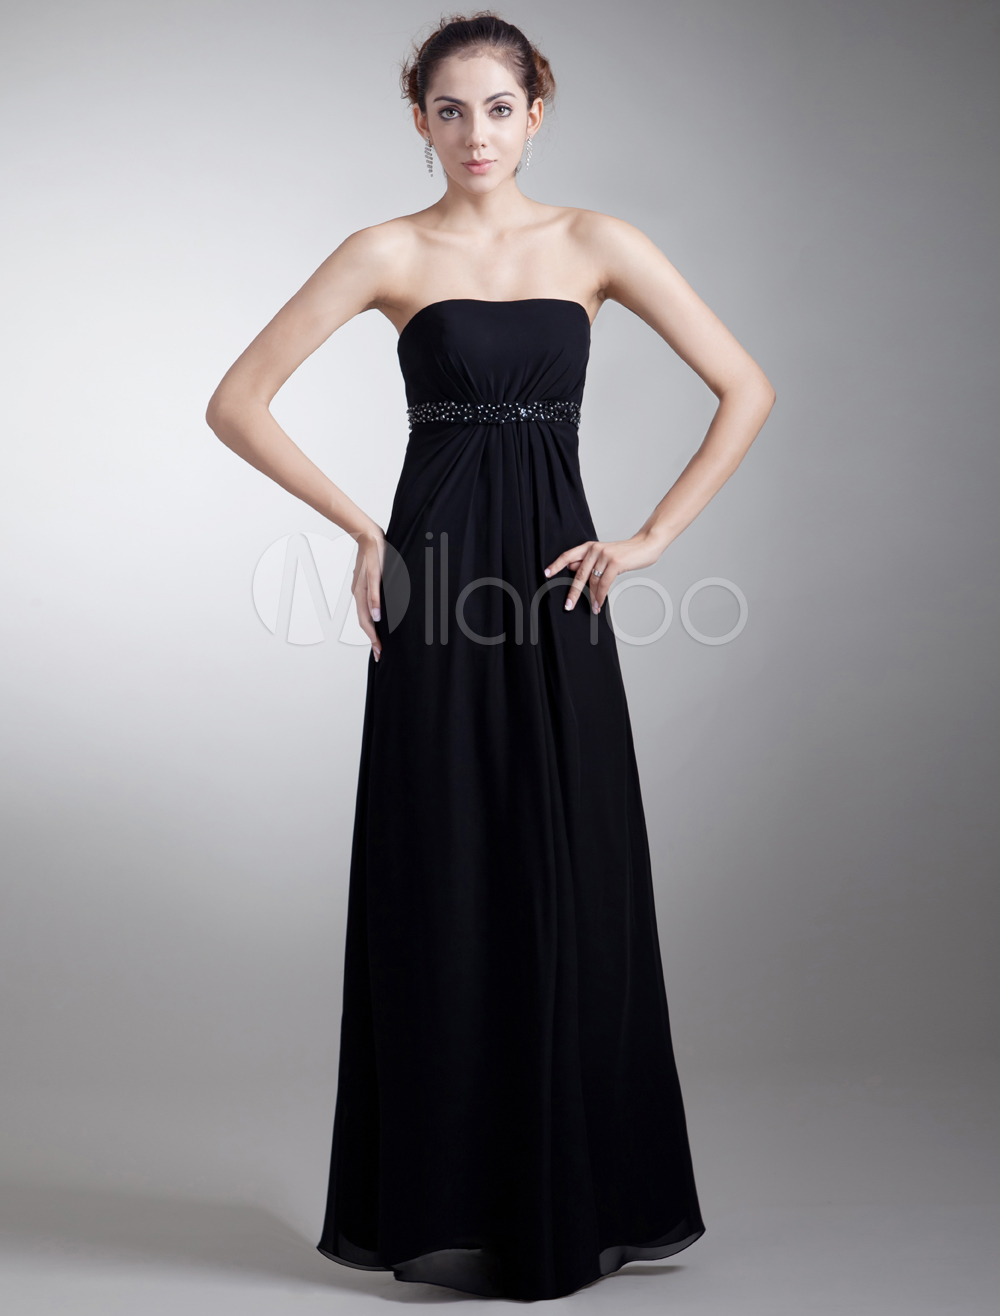 Elegant Black Chiffon Beading Strapless Sexy Evening Dress (Wedding Evening Dresses) photo